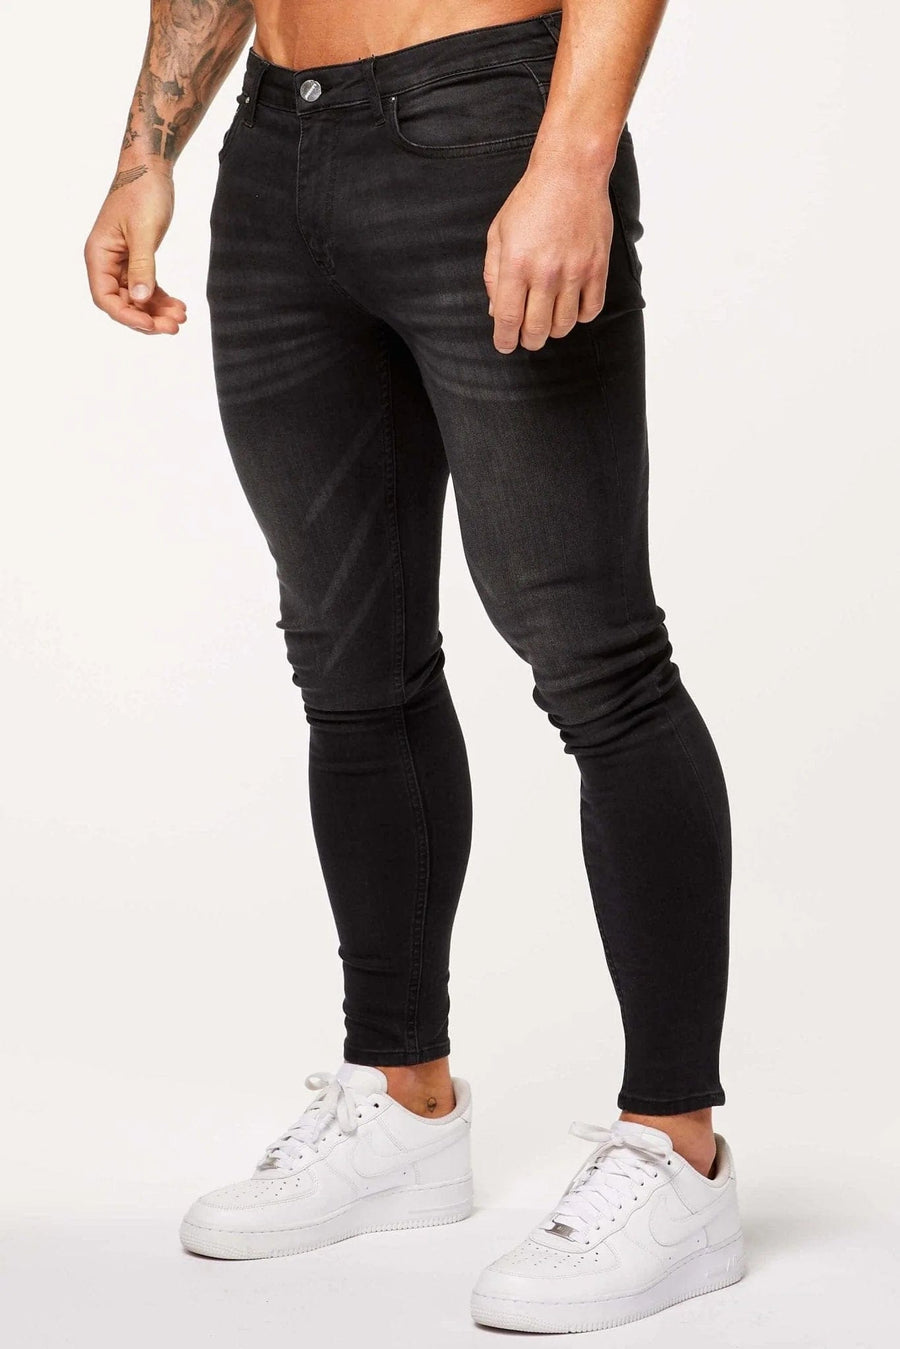 Legend London Jeans SPRAY ON JEANS - WASHED BLACK